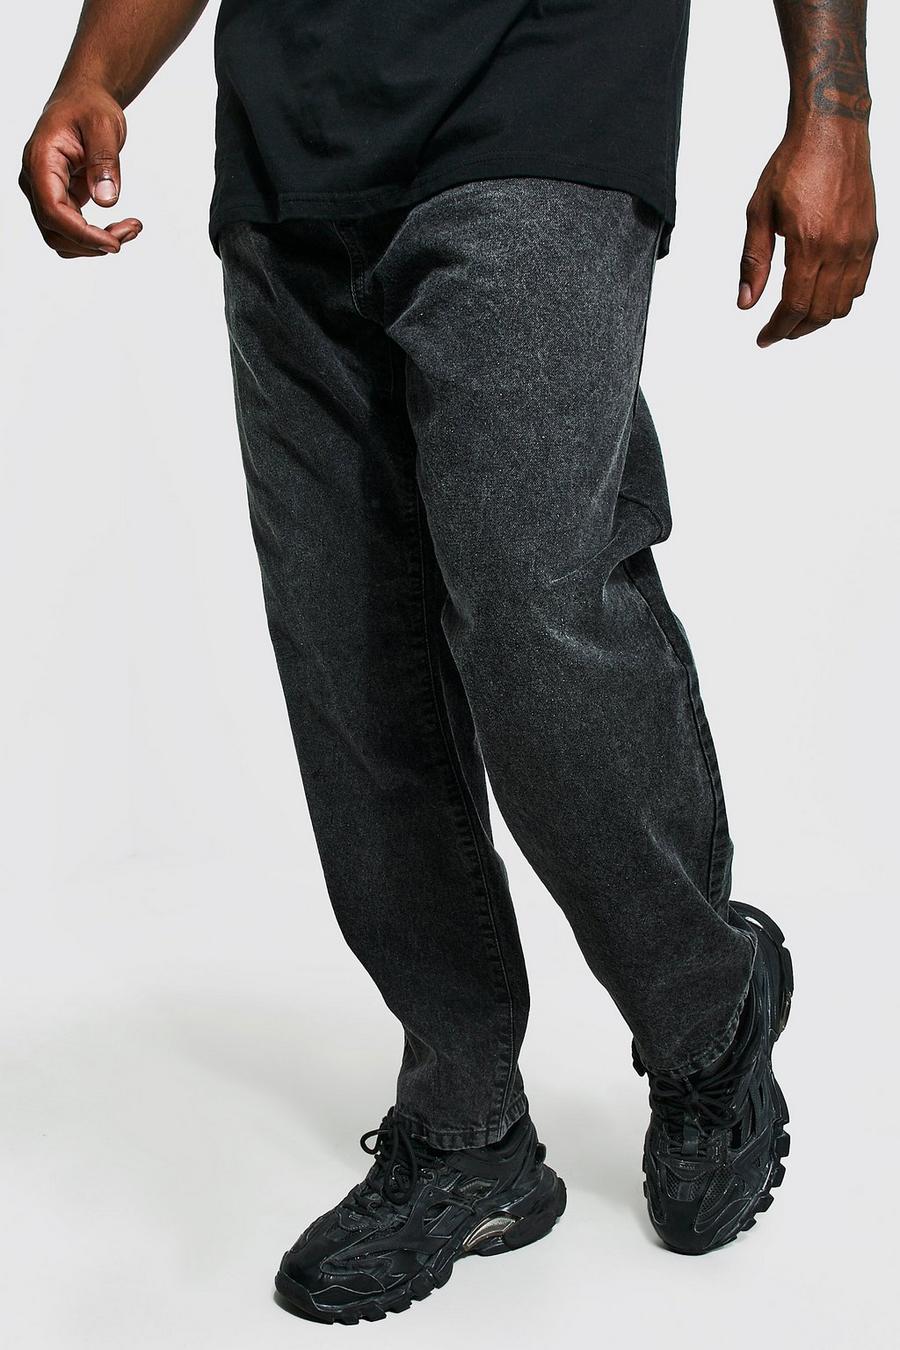 Charcoal gris ג'ינס בגזרה צרה בשילוב כותנה ממוחזרת, מידות גדולות